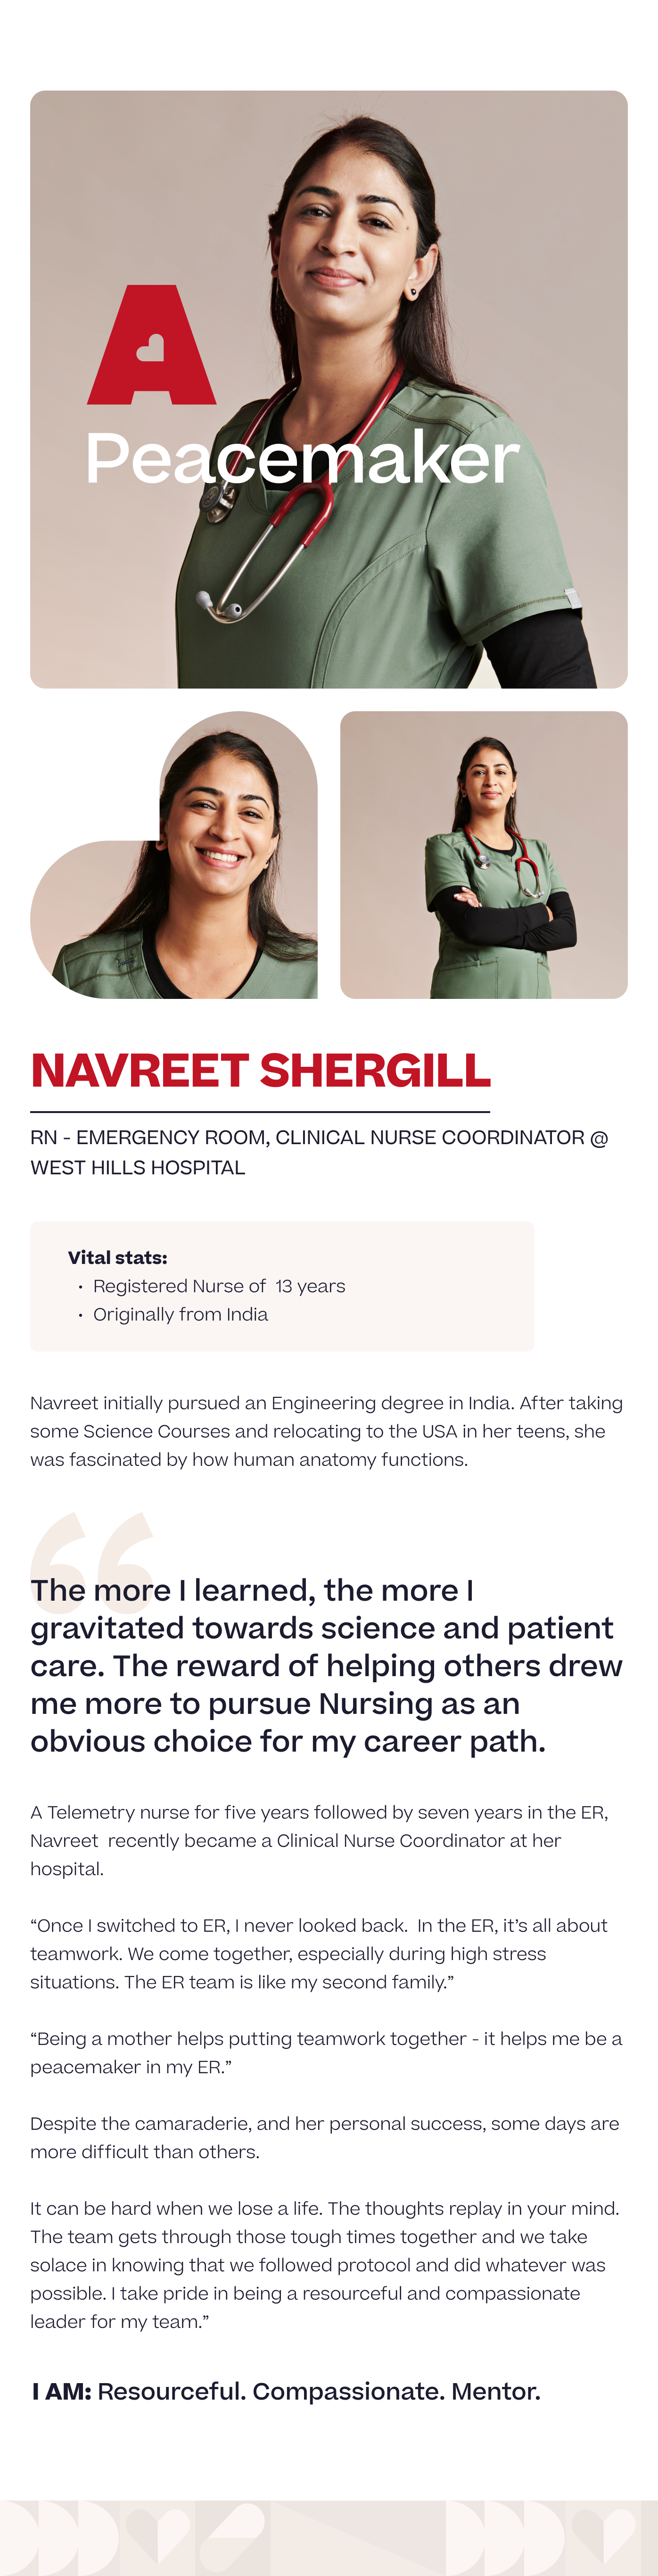 About Navreet Shergill, RN - emergency room, clinical nurse coordinator at West Hills Hospital.